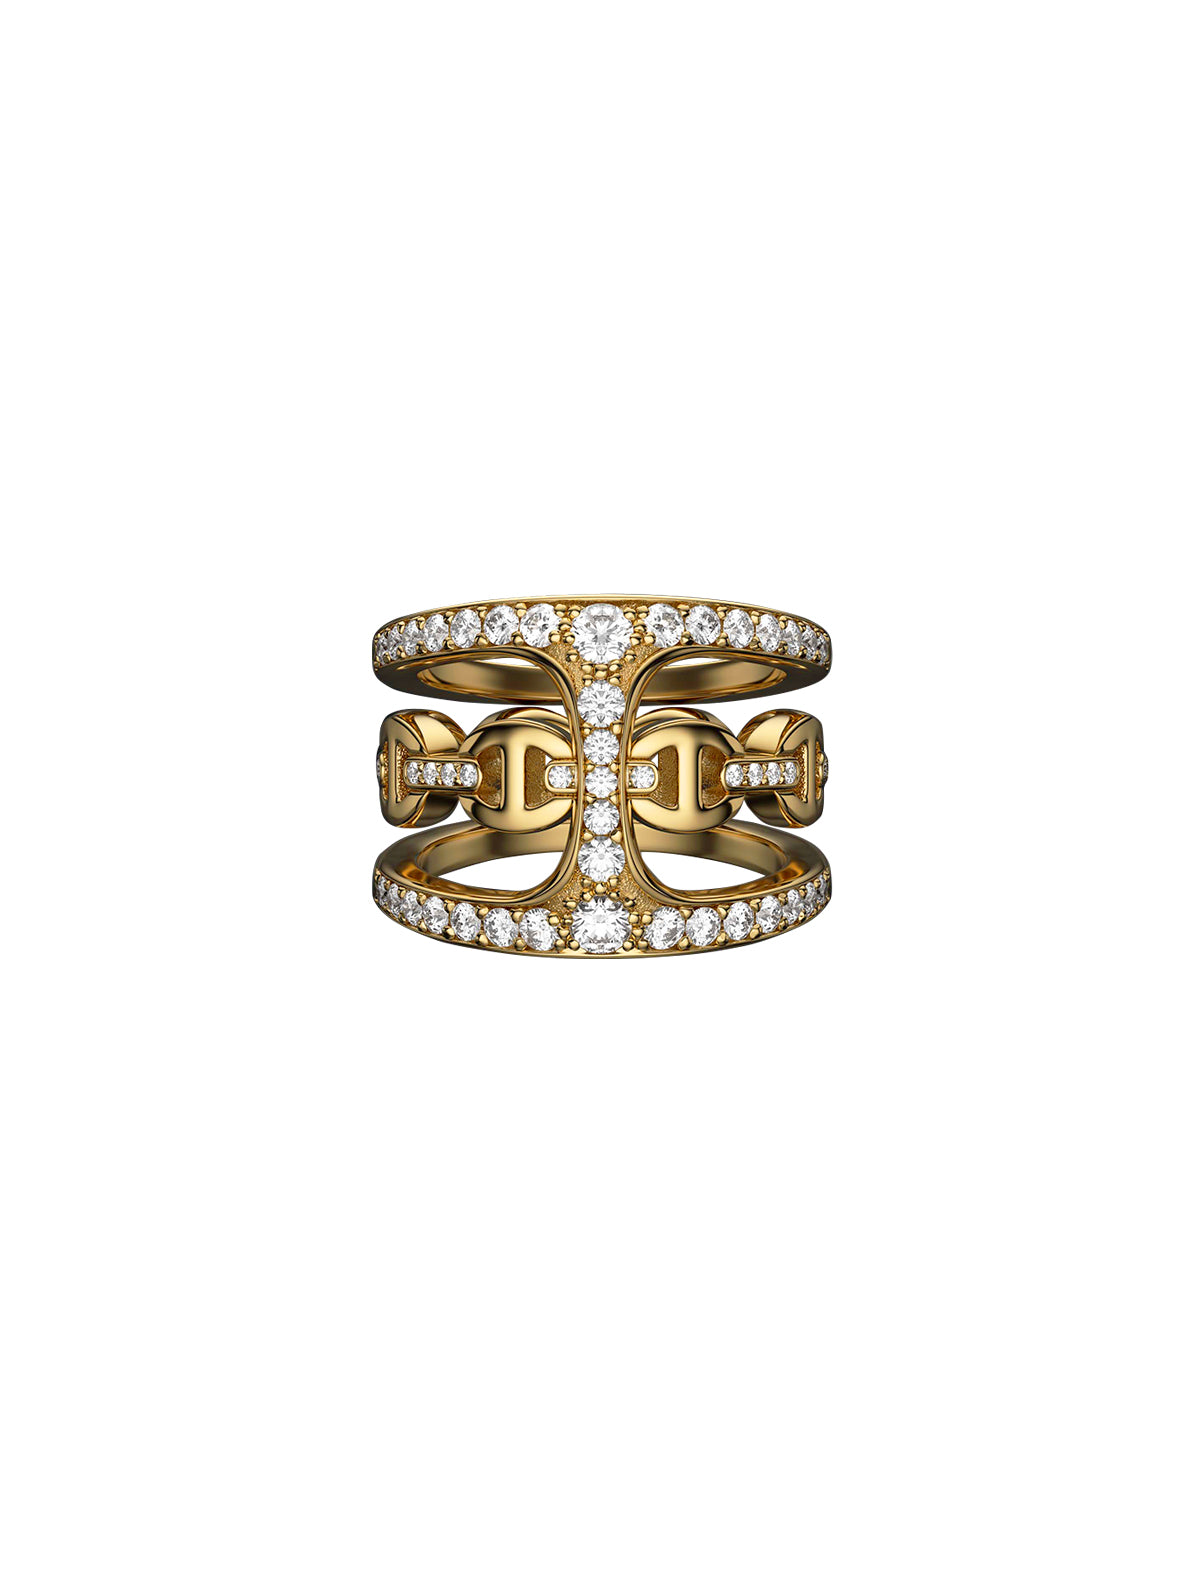 HOORSENBUHS Dame Phantom Clique with Diamonds Ring 18k Yellow Gold